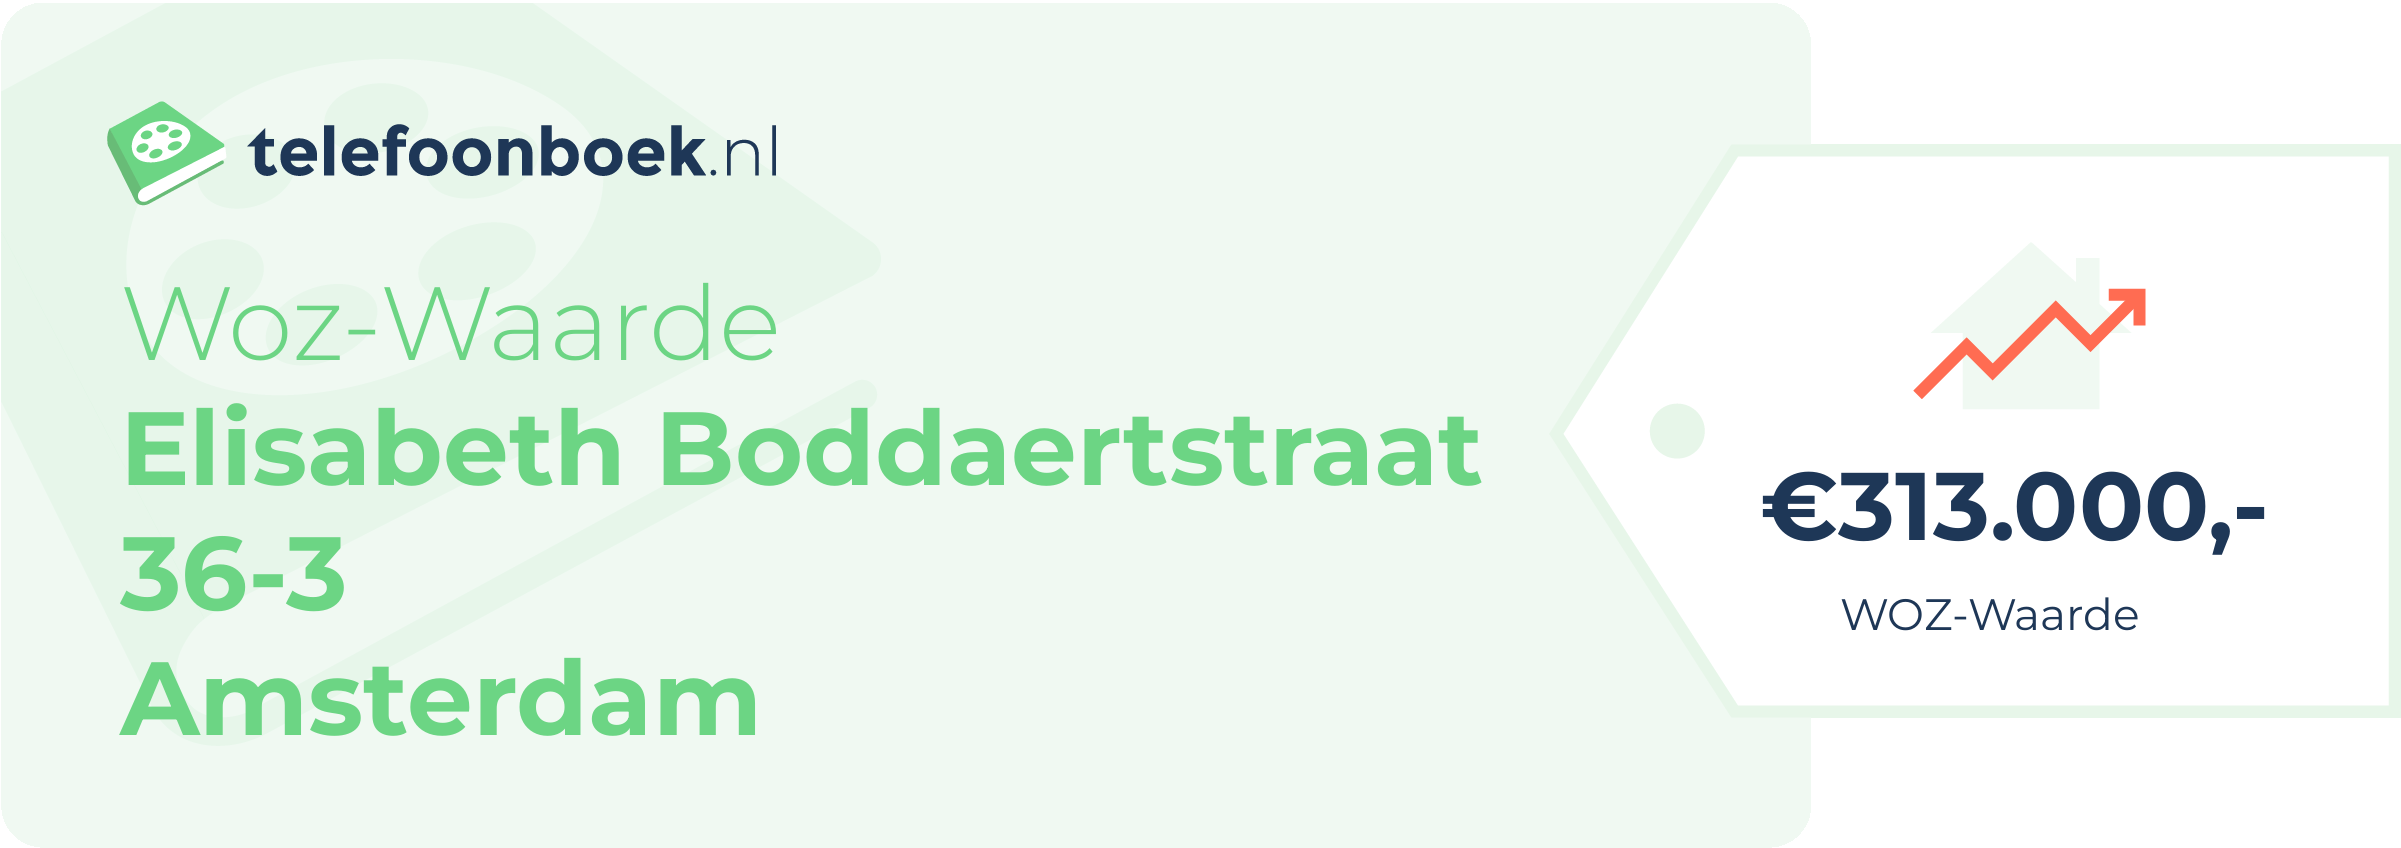 WOZ-waarde Elisabeth Boddaertstraat 36-3 Amsterdam